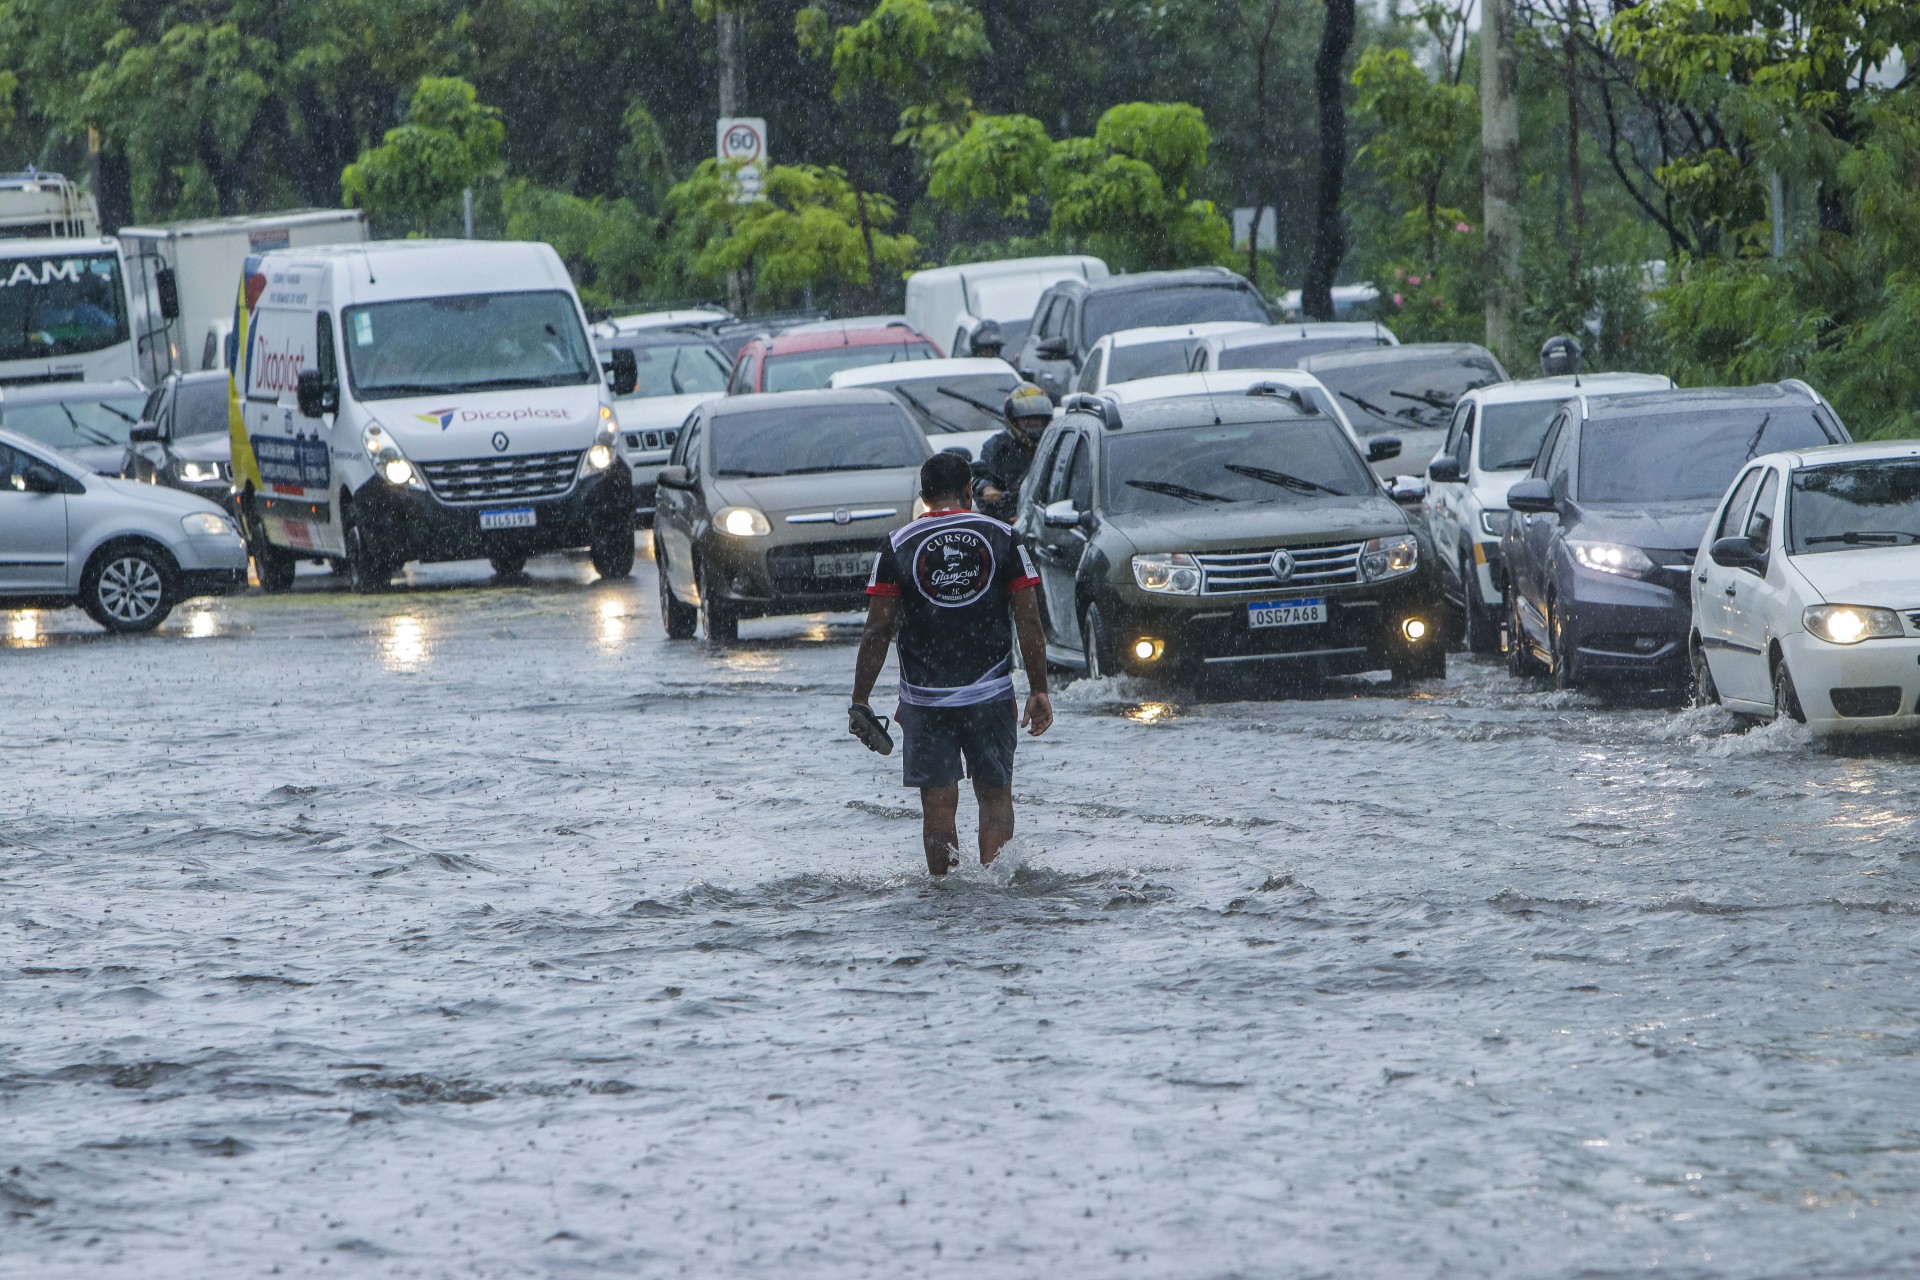 ￼ALAGAMENTO na avenida Raul Barbosa, no bairro Aerolândia, após maior chuva do ano no Ceará (Foto: FCO FONTENELE)